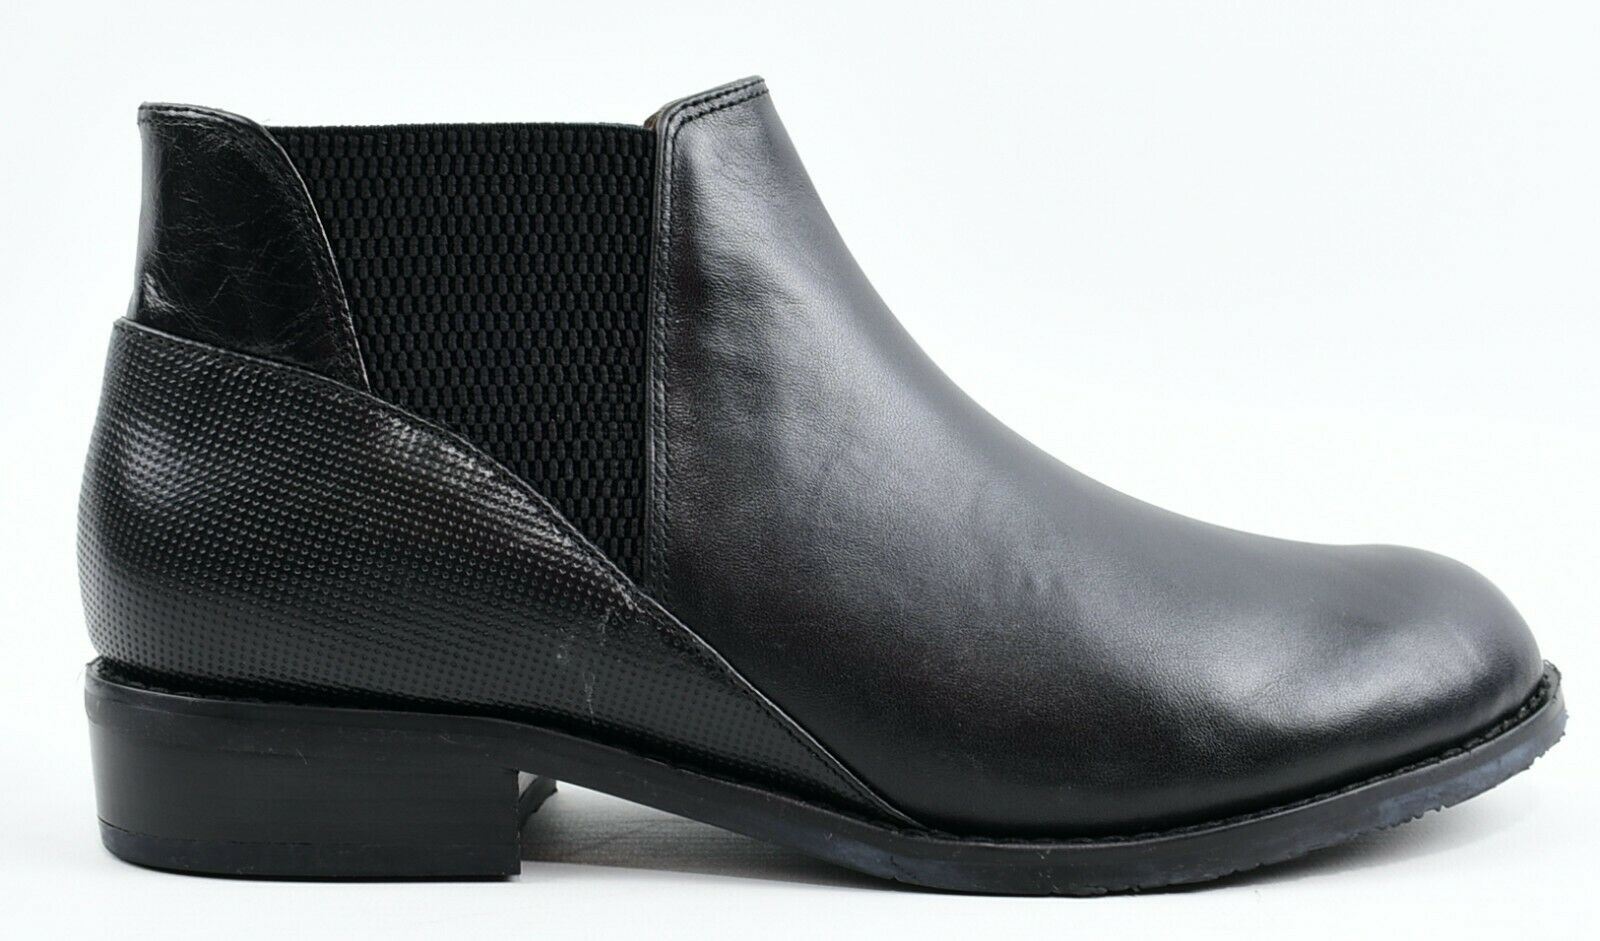 ESSKA Women's ALBA Genuine Leather Chelsea Ankle Boots, Black, size UK 7 / EU 40